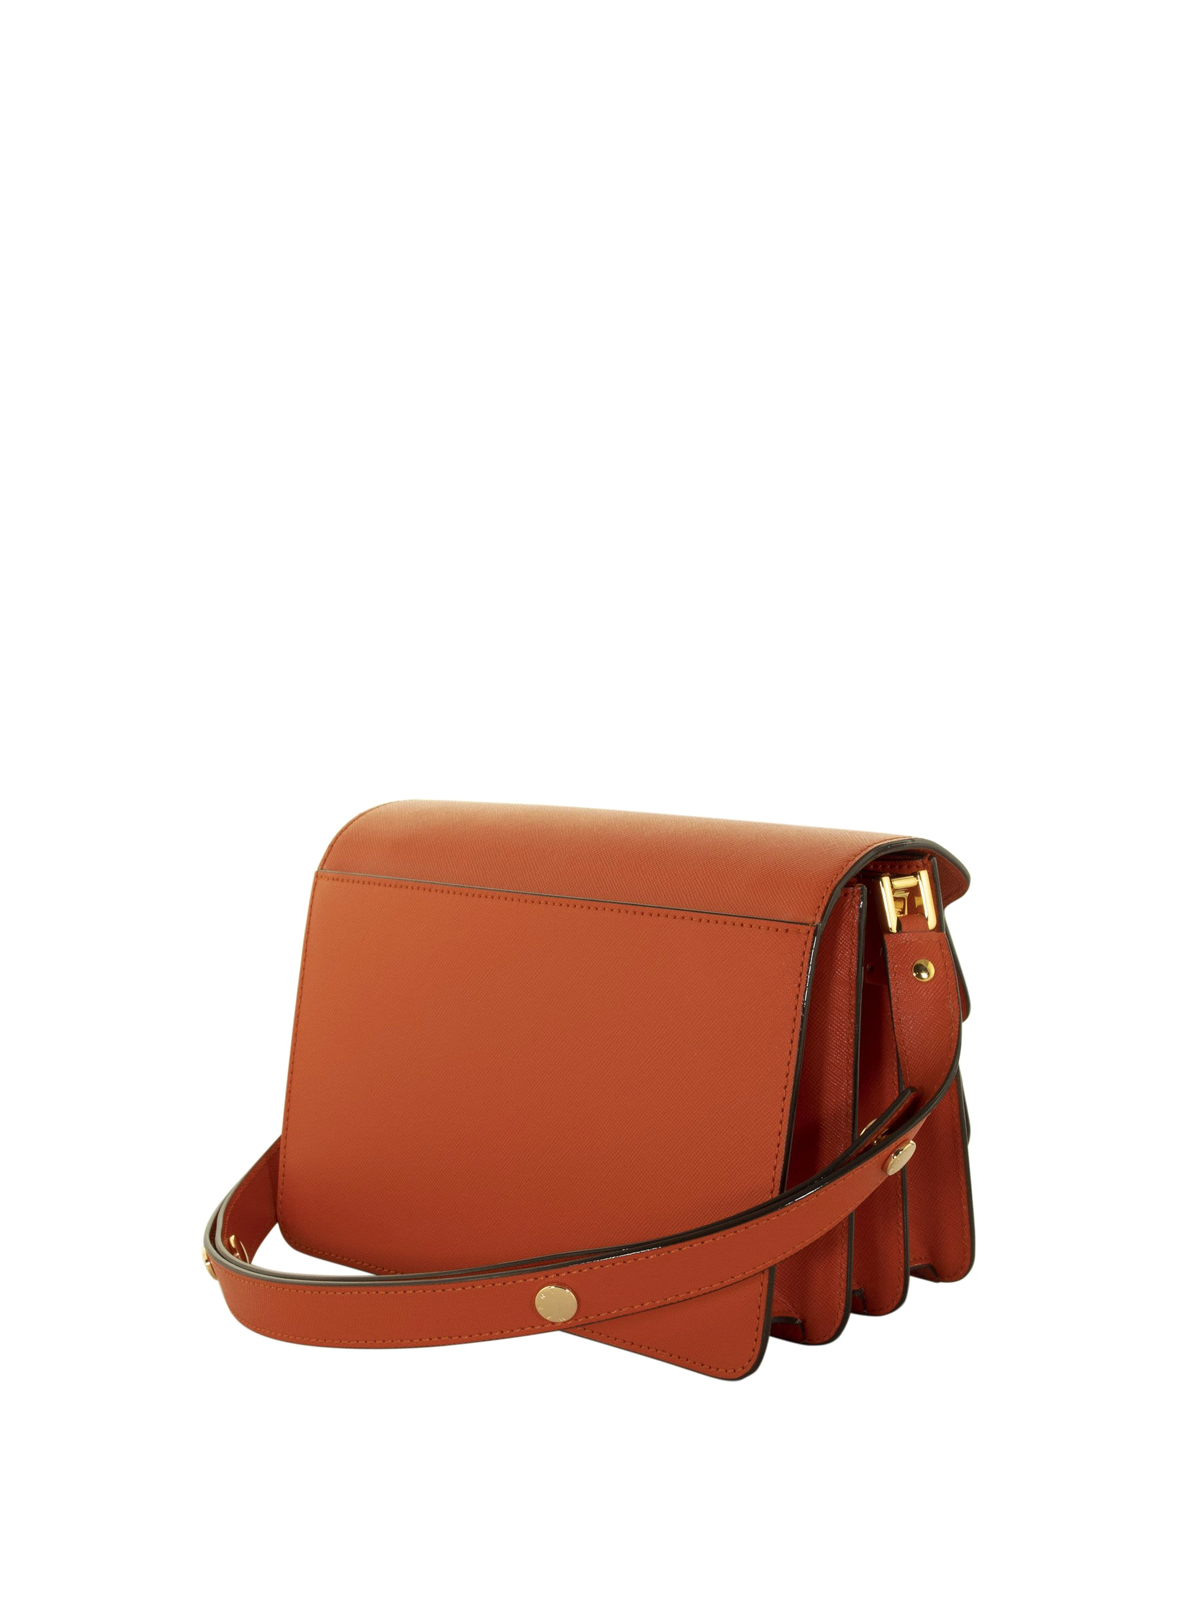 Trunk Leather Shoulder Bag in Red - Marni